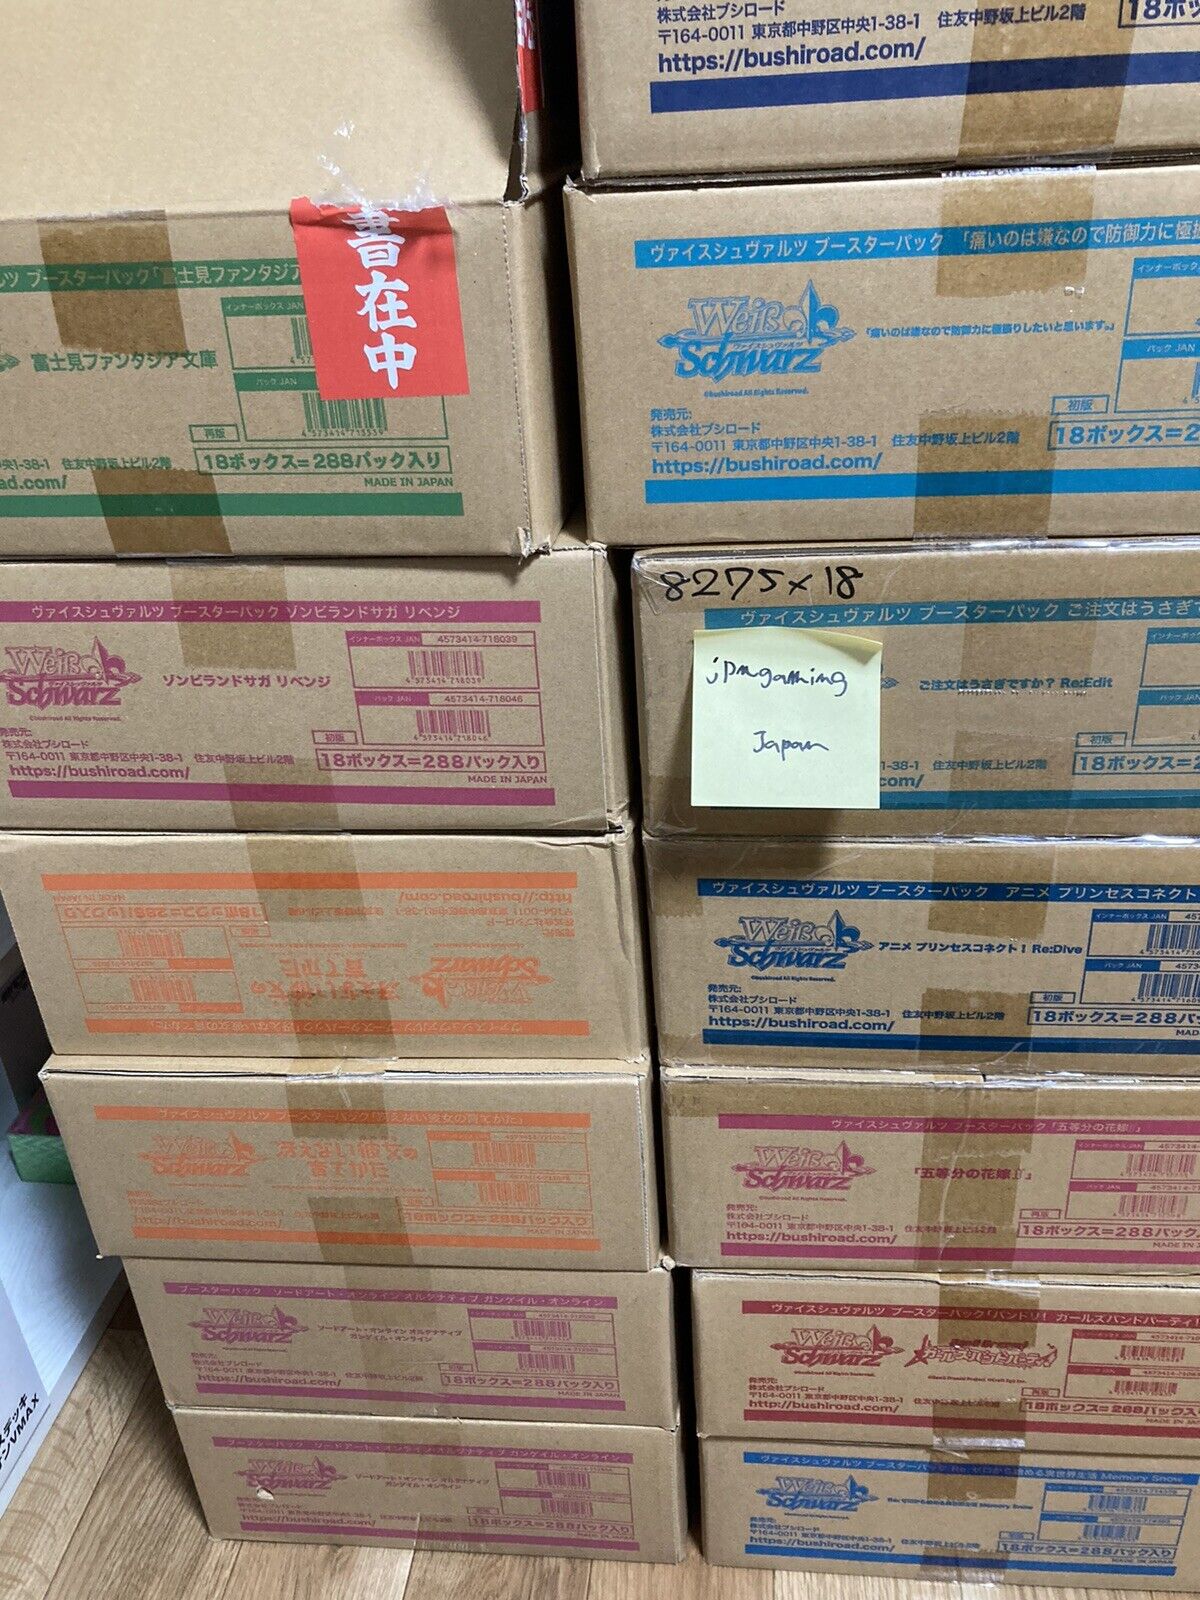 Case(18 boxes) of Weiss Schwarz Chainsaw Man Japanese Booster Box FedEx IP